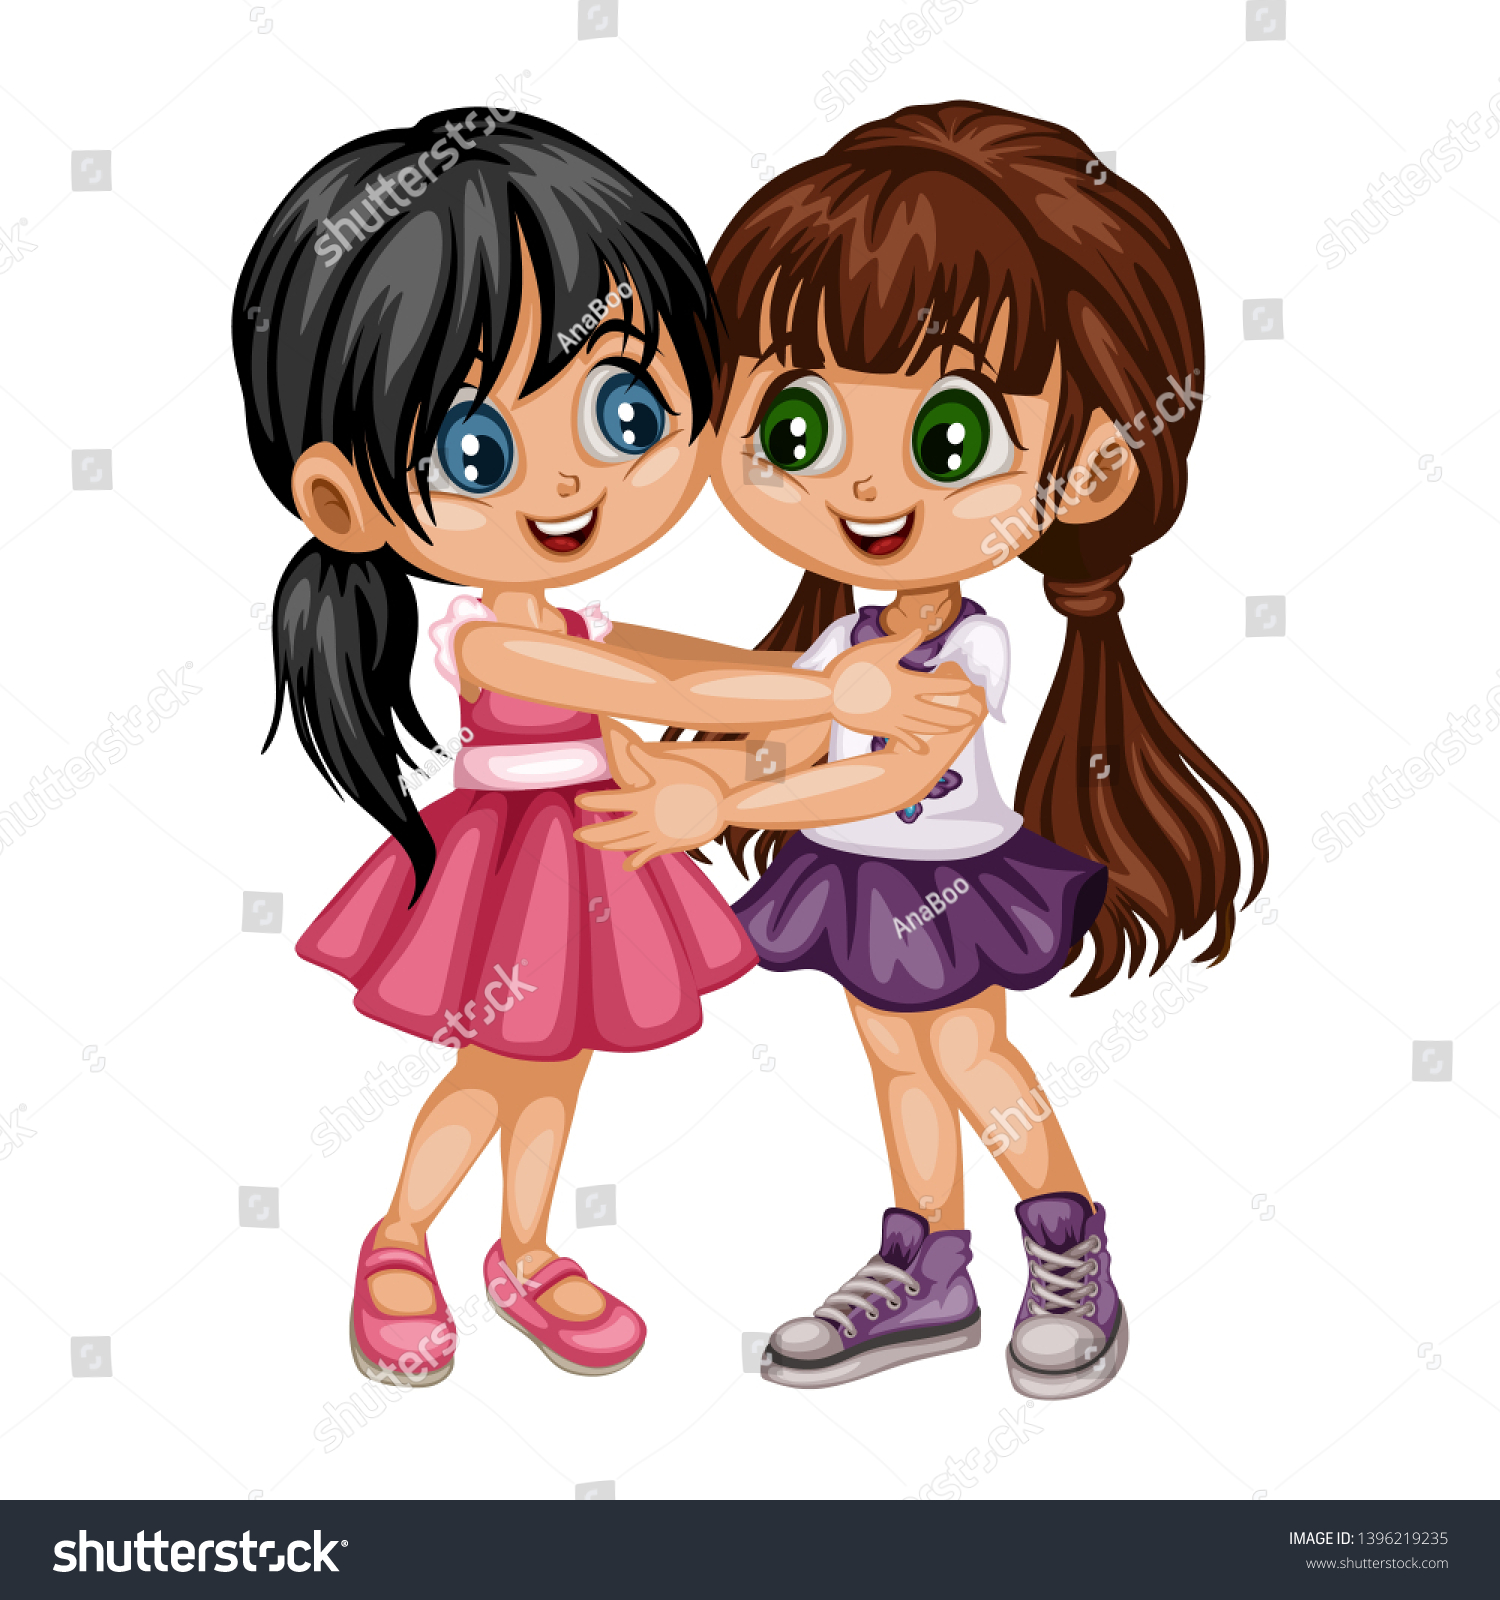 Cartoon two girls